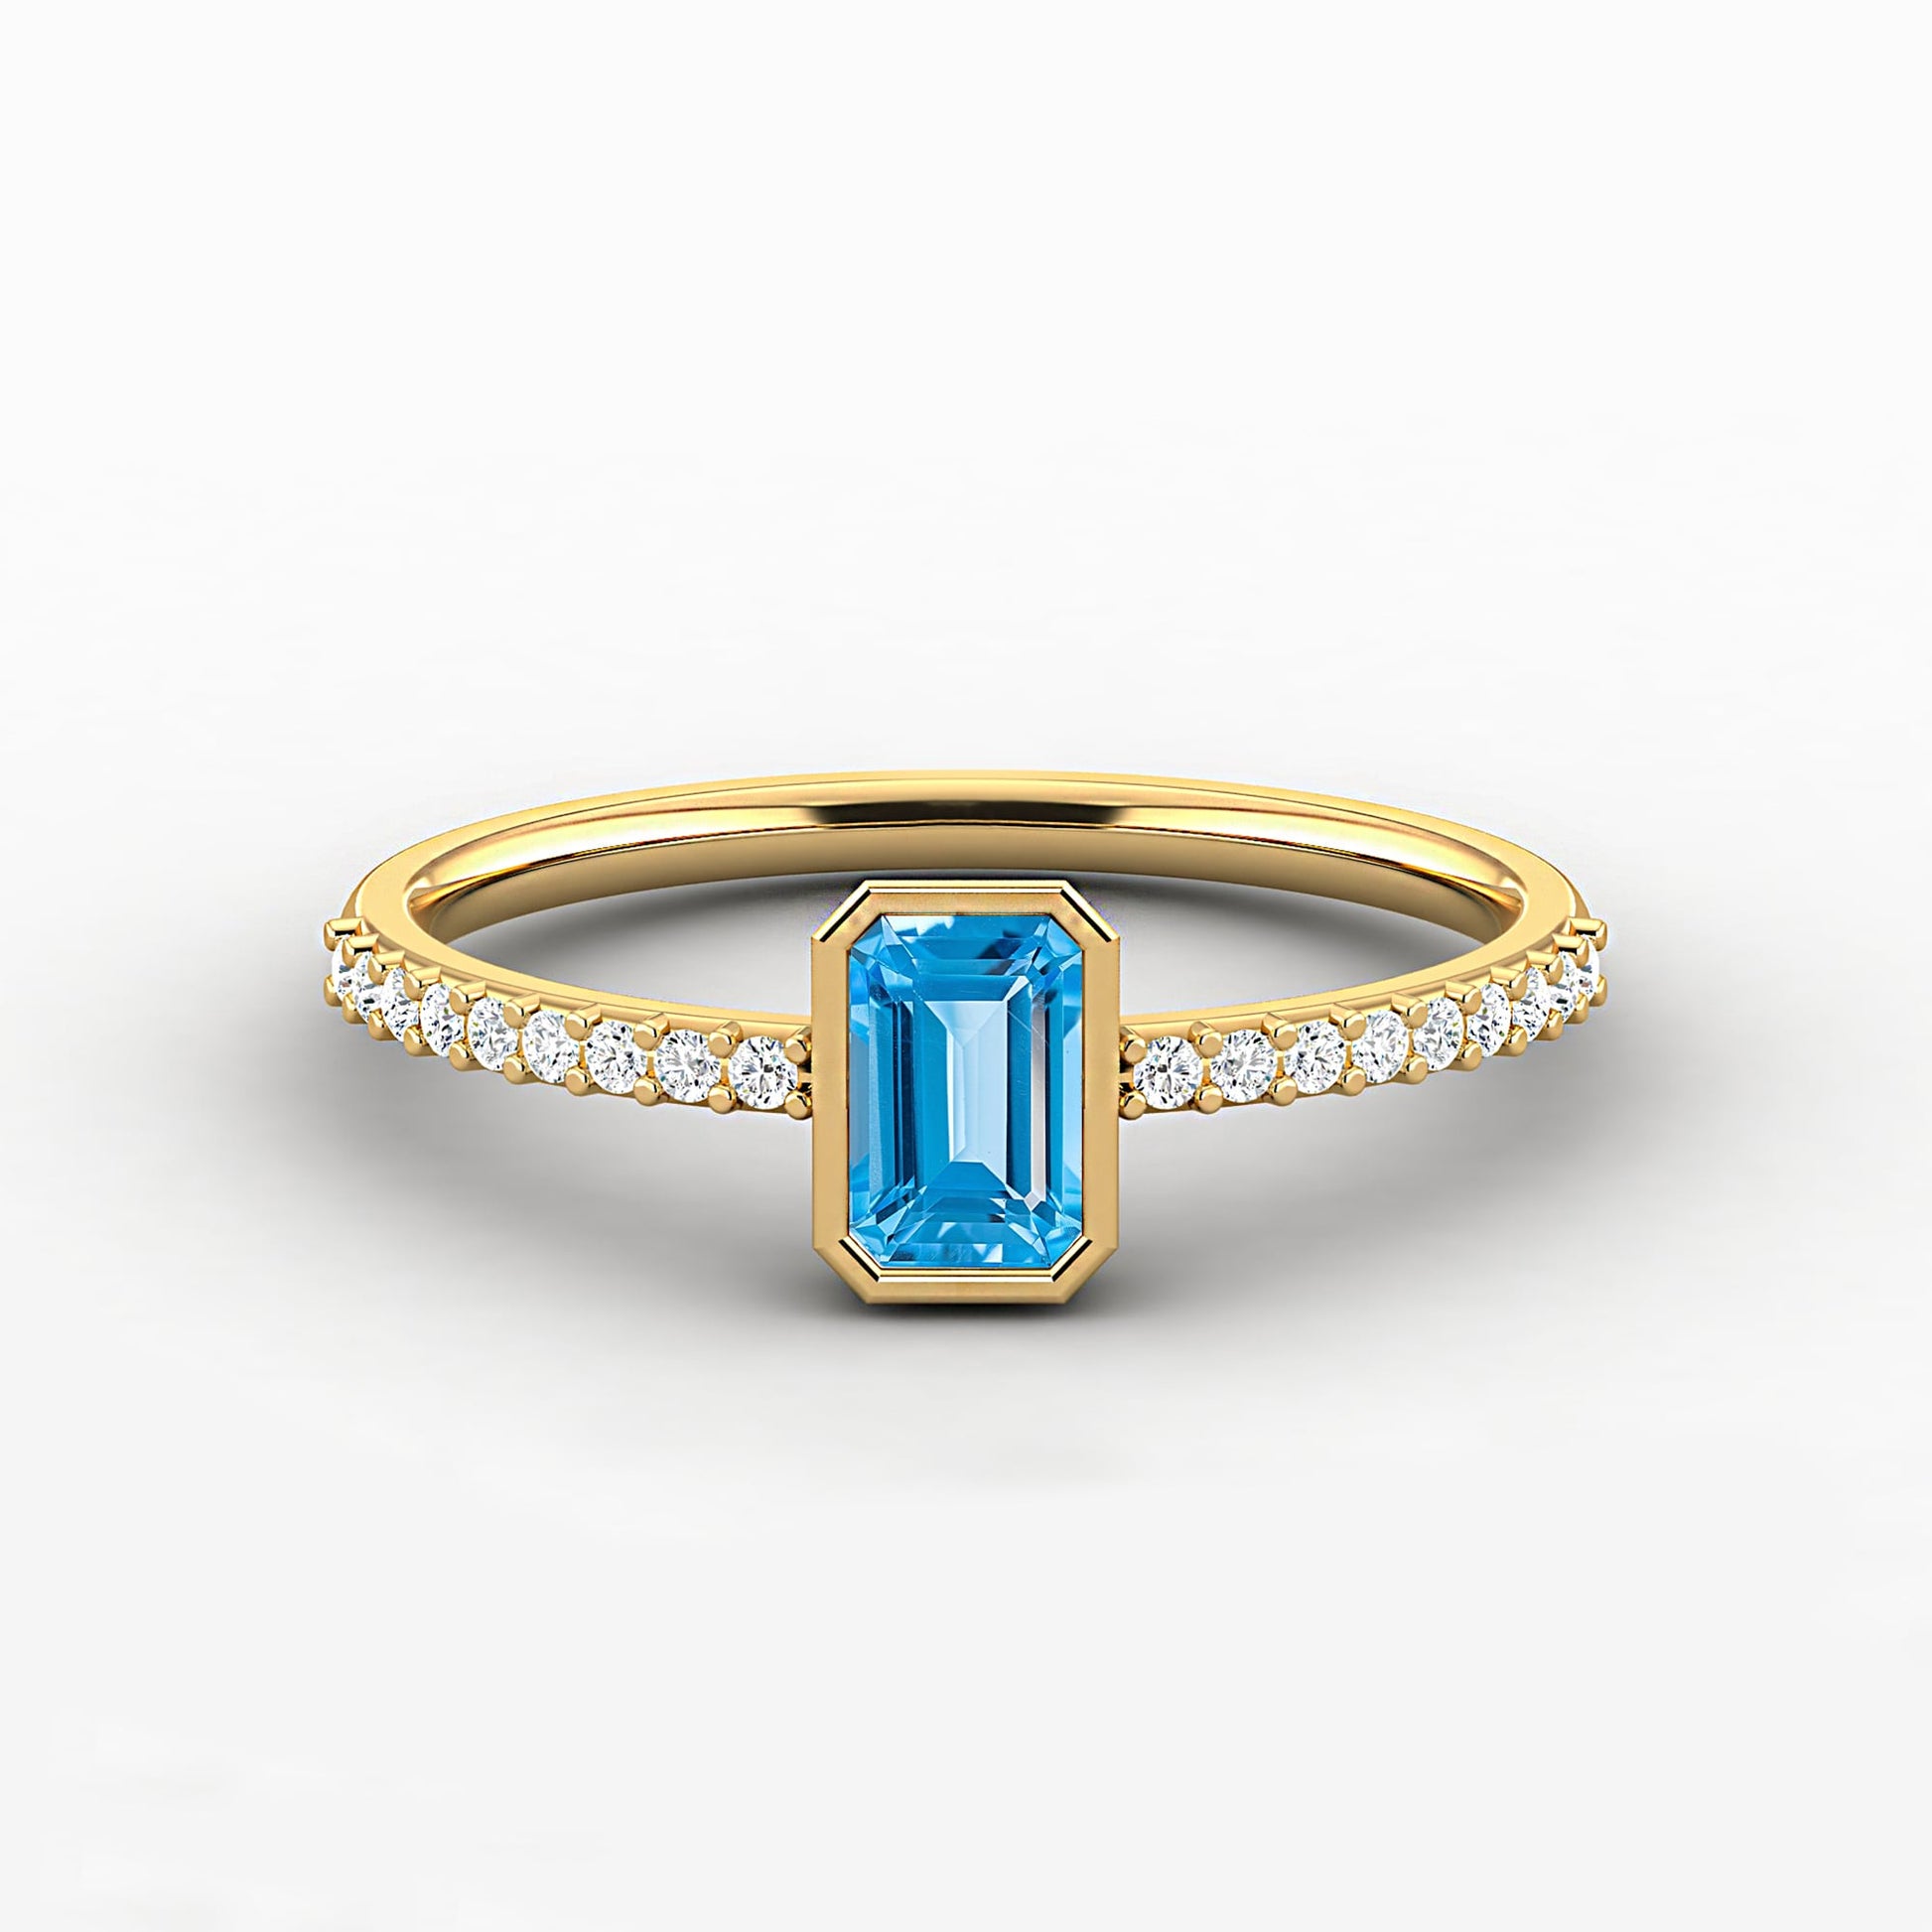 a blue diamond ring with a blue gem